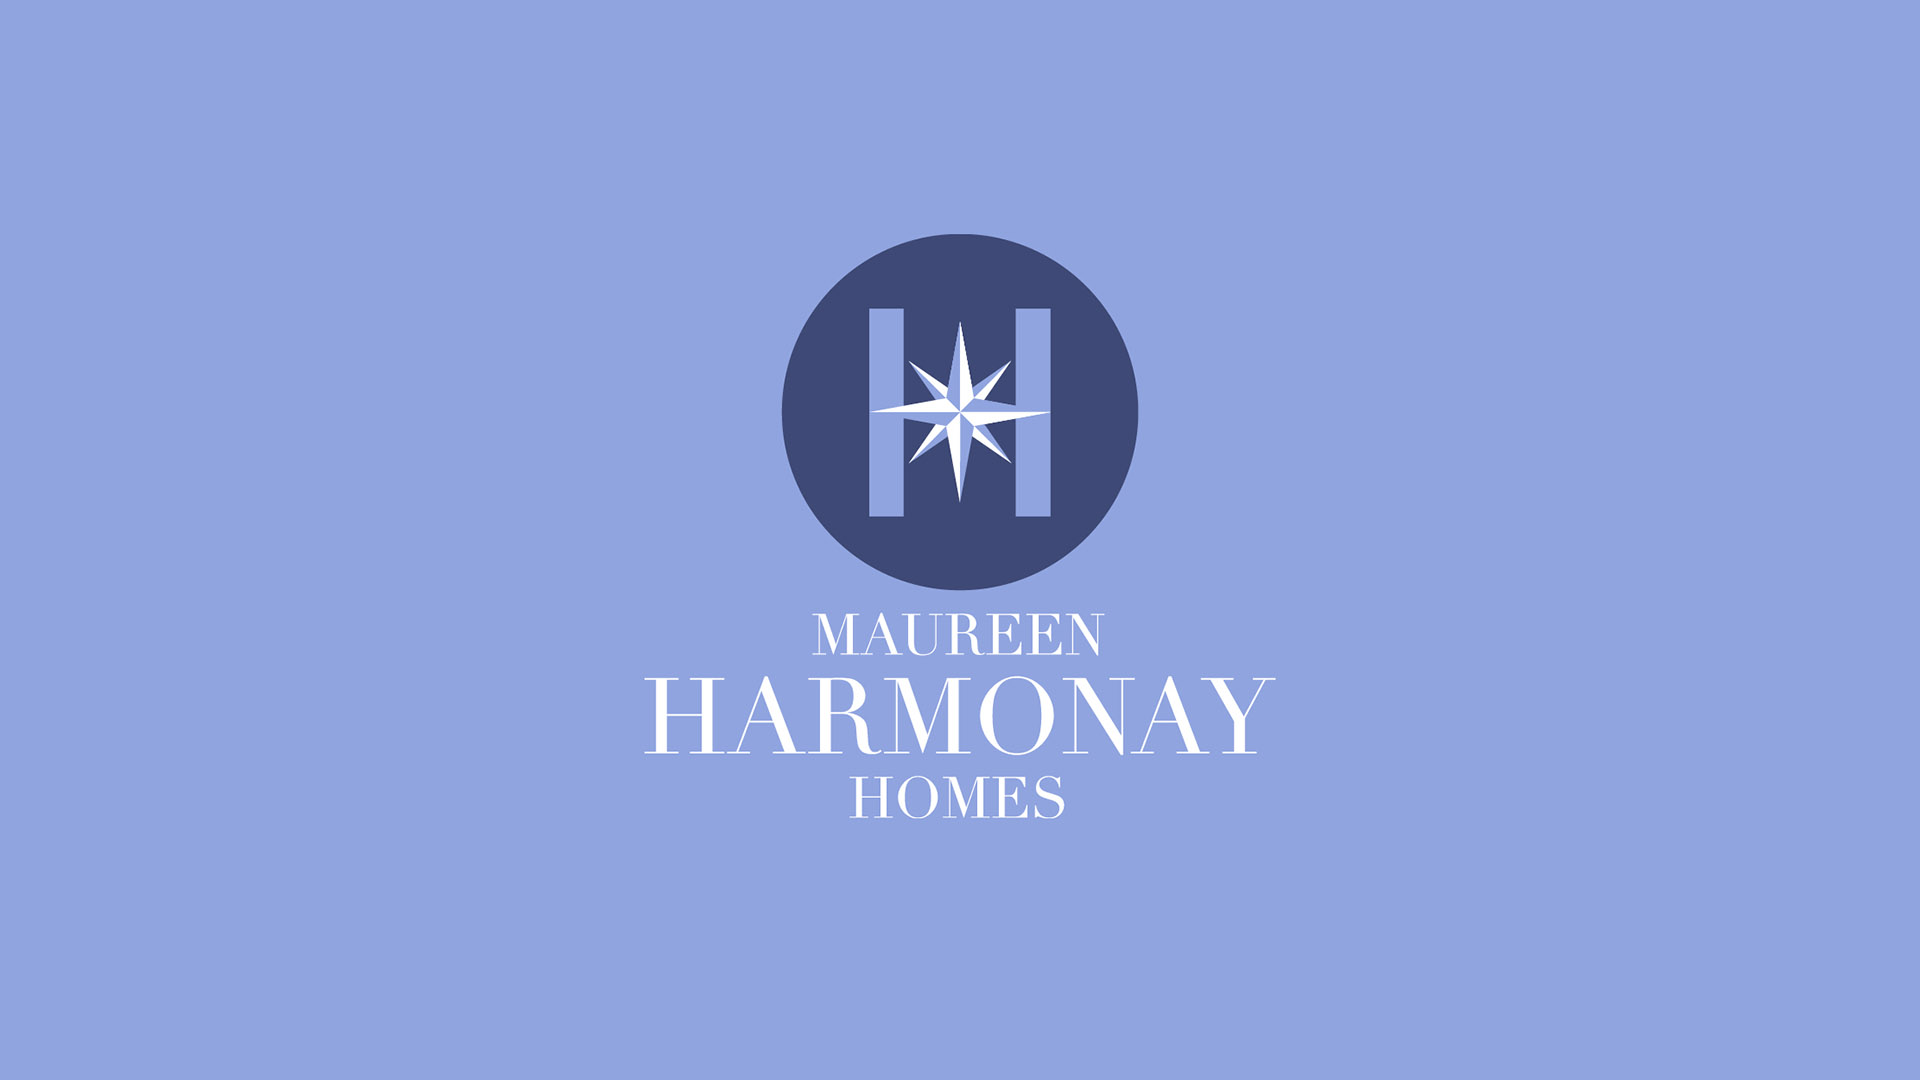 Harmonay Homes logo mark on lavender